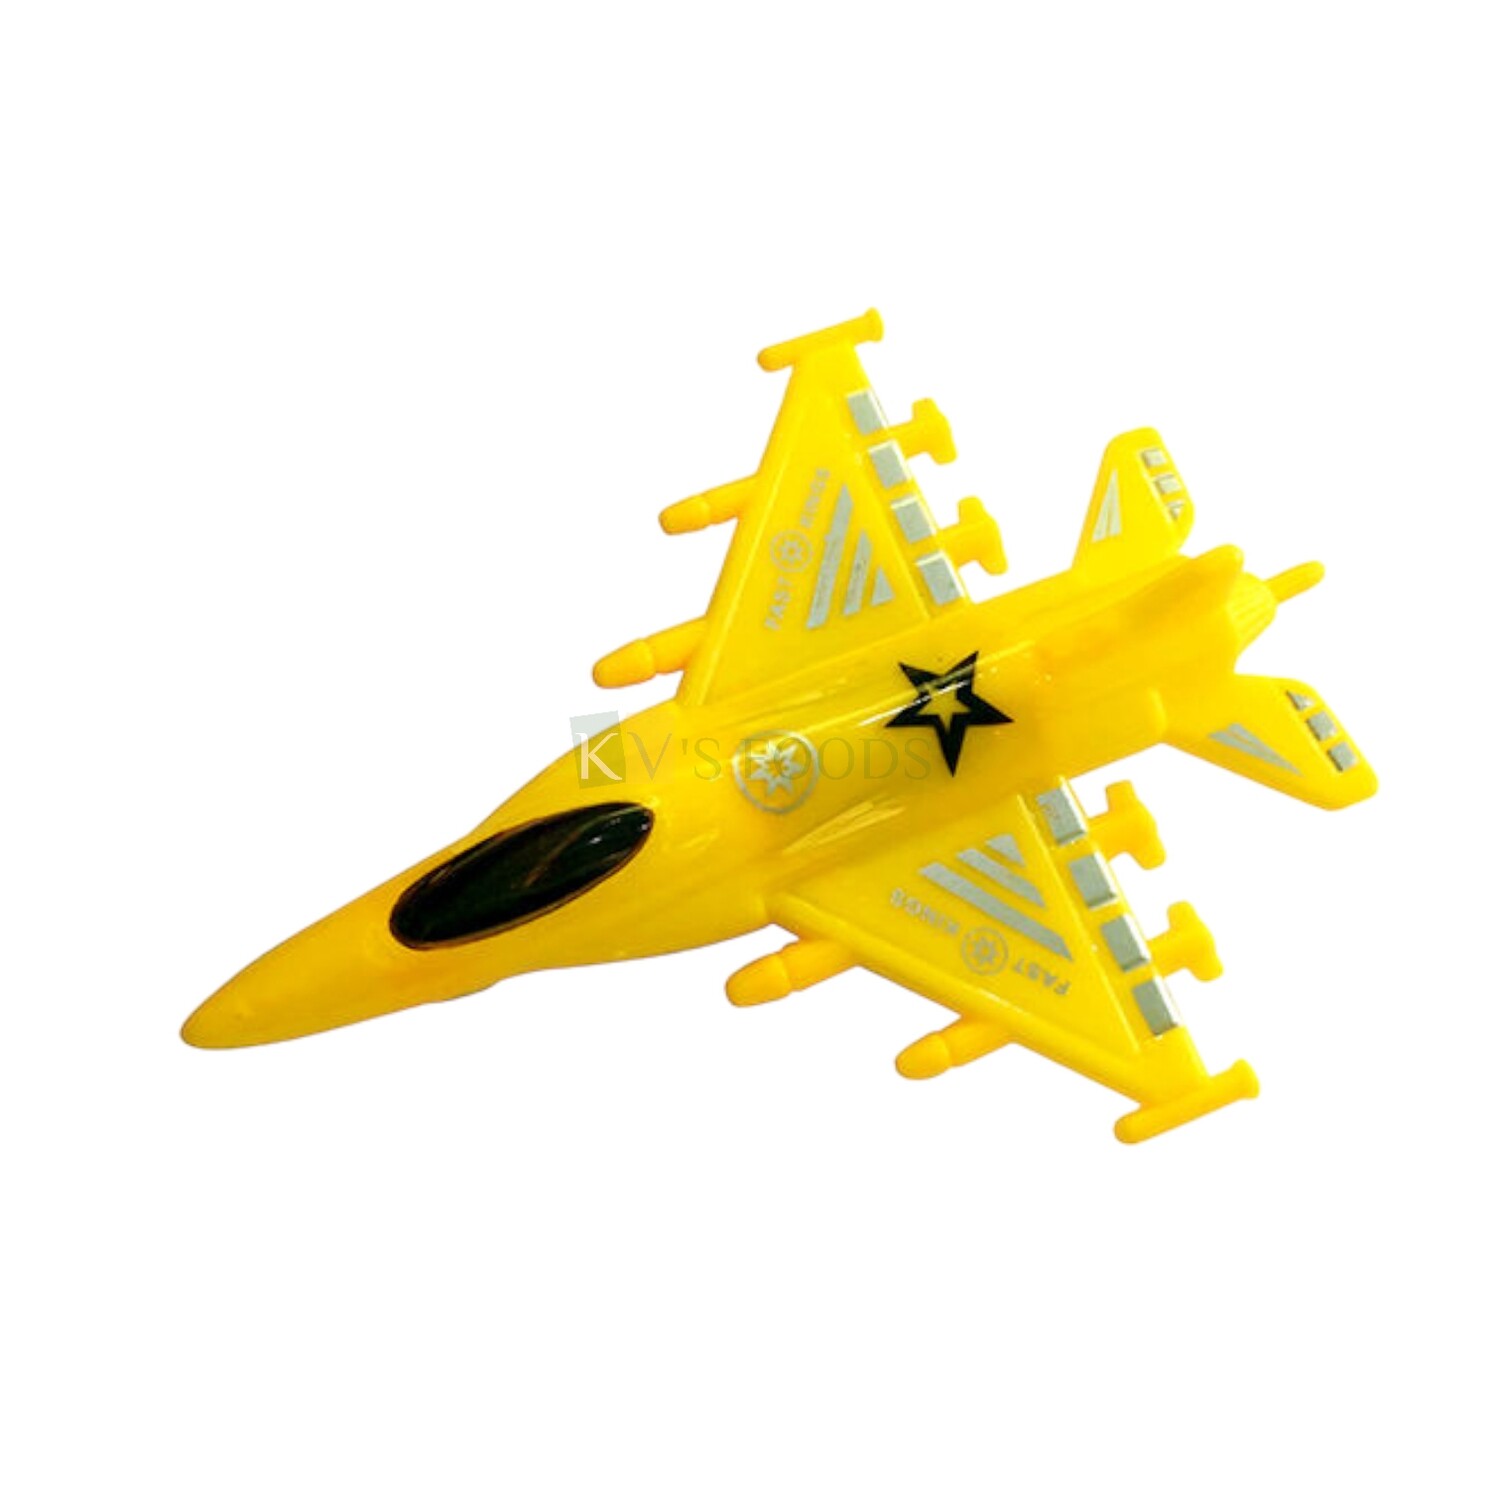 1PC Fighter Plane Cake Topper, Plane Toys For Kids, Airplane Cake Topper Toy, Aeroplane Toy for Cakes Decoration, Miniature Figurine Cake Topper for Pilot Theme